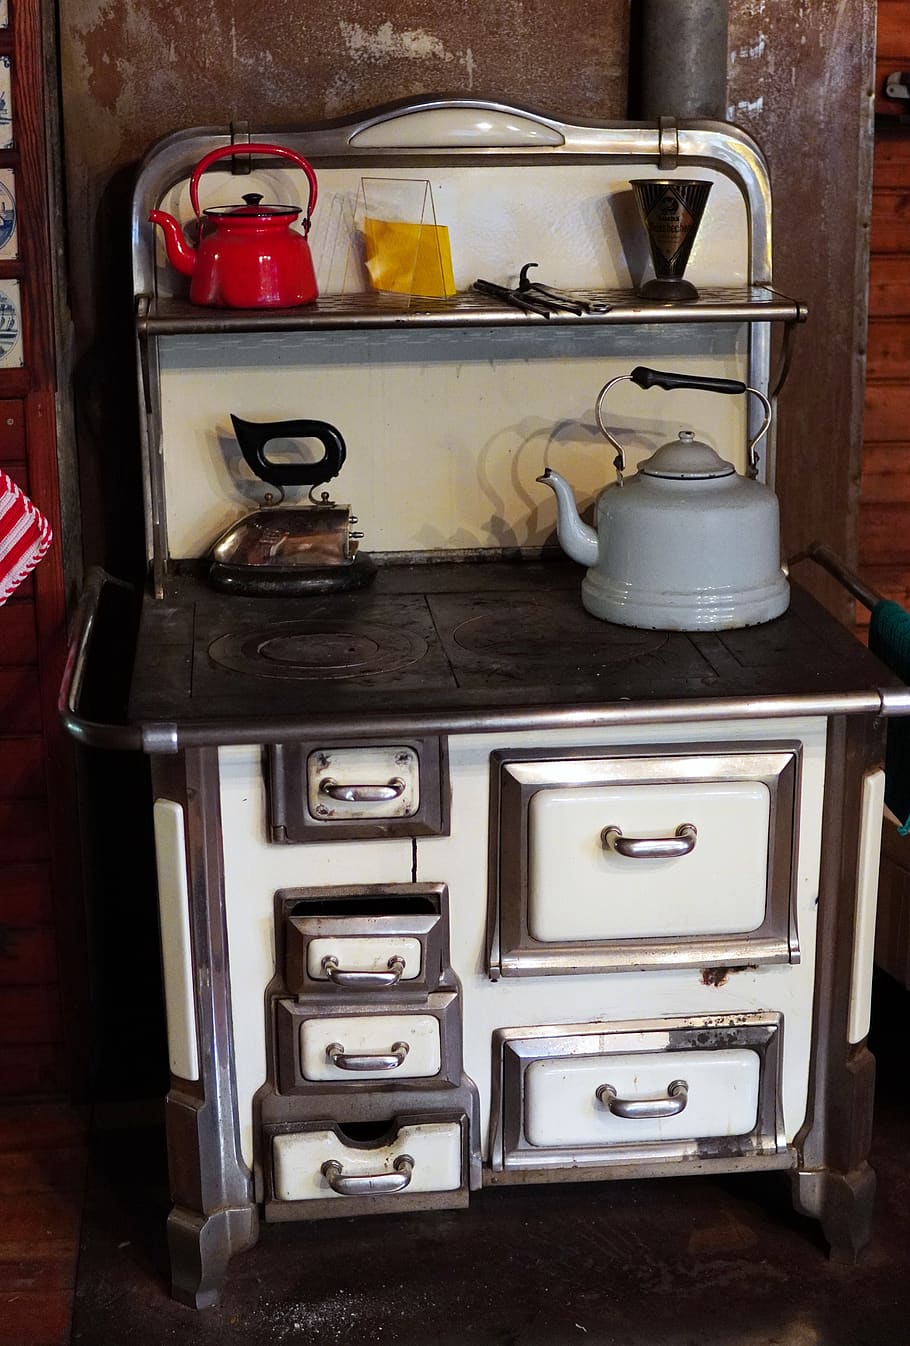 oven, old, cook, antique, stove, kitchen, historically, kohleherd, nostalgia, household equipment